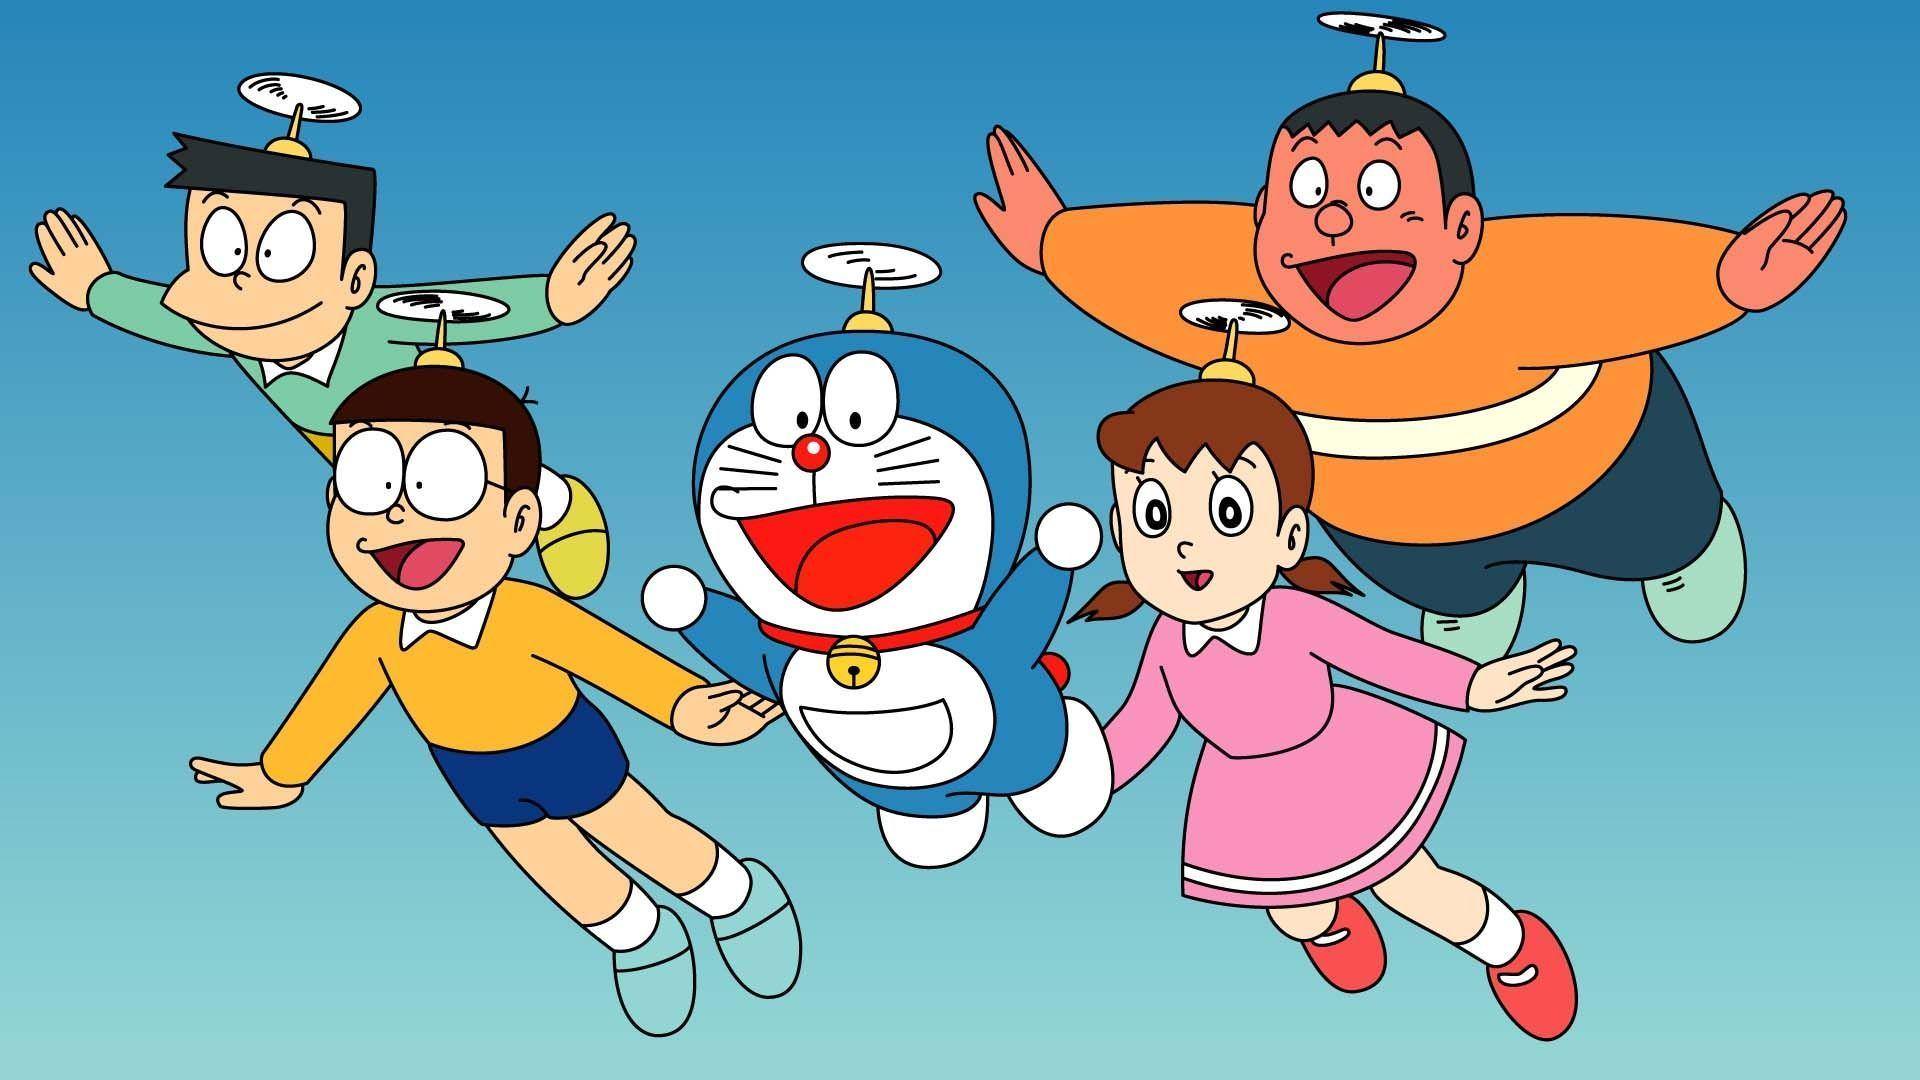 Doraemon Wallpaper Hd Free Download Doremon 1080p 2k 4k 5k Hd Wallpapers  Free Download Doraemon Wallpaper Free For Android Apk Downl  Doraemon  Anime Hình nền